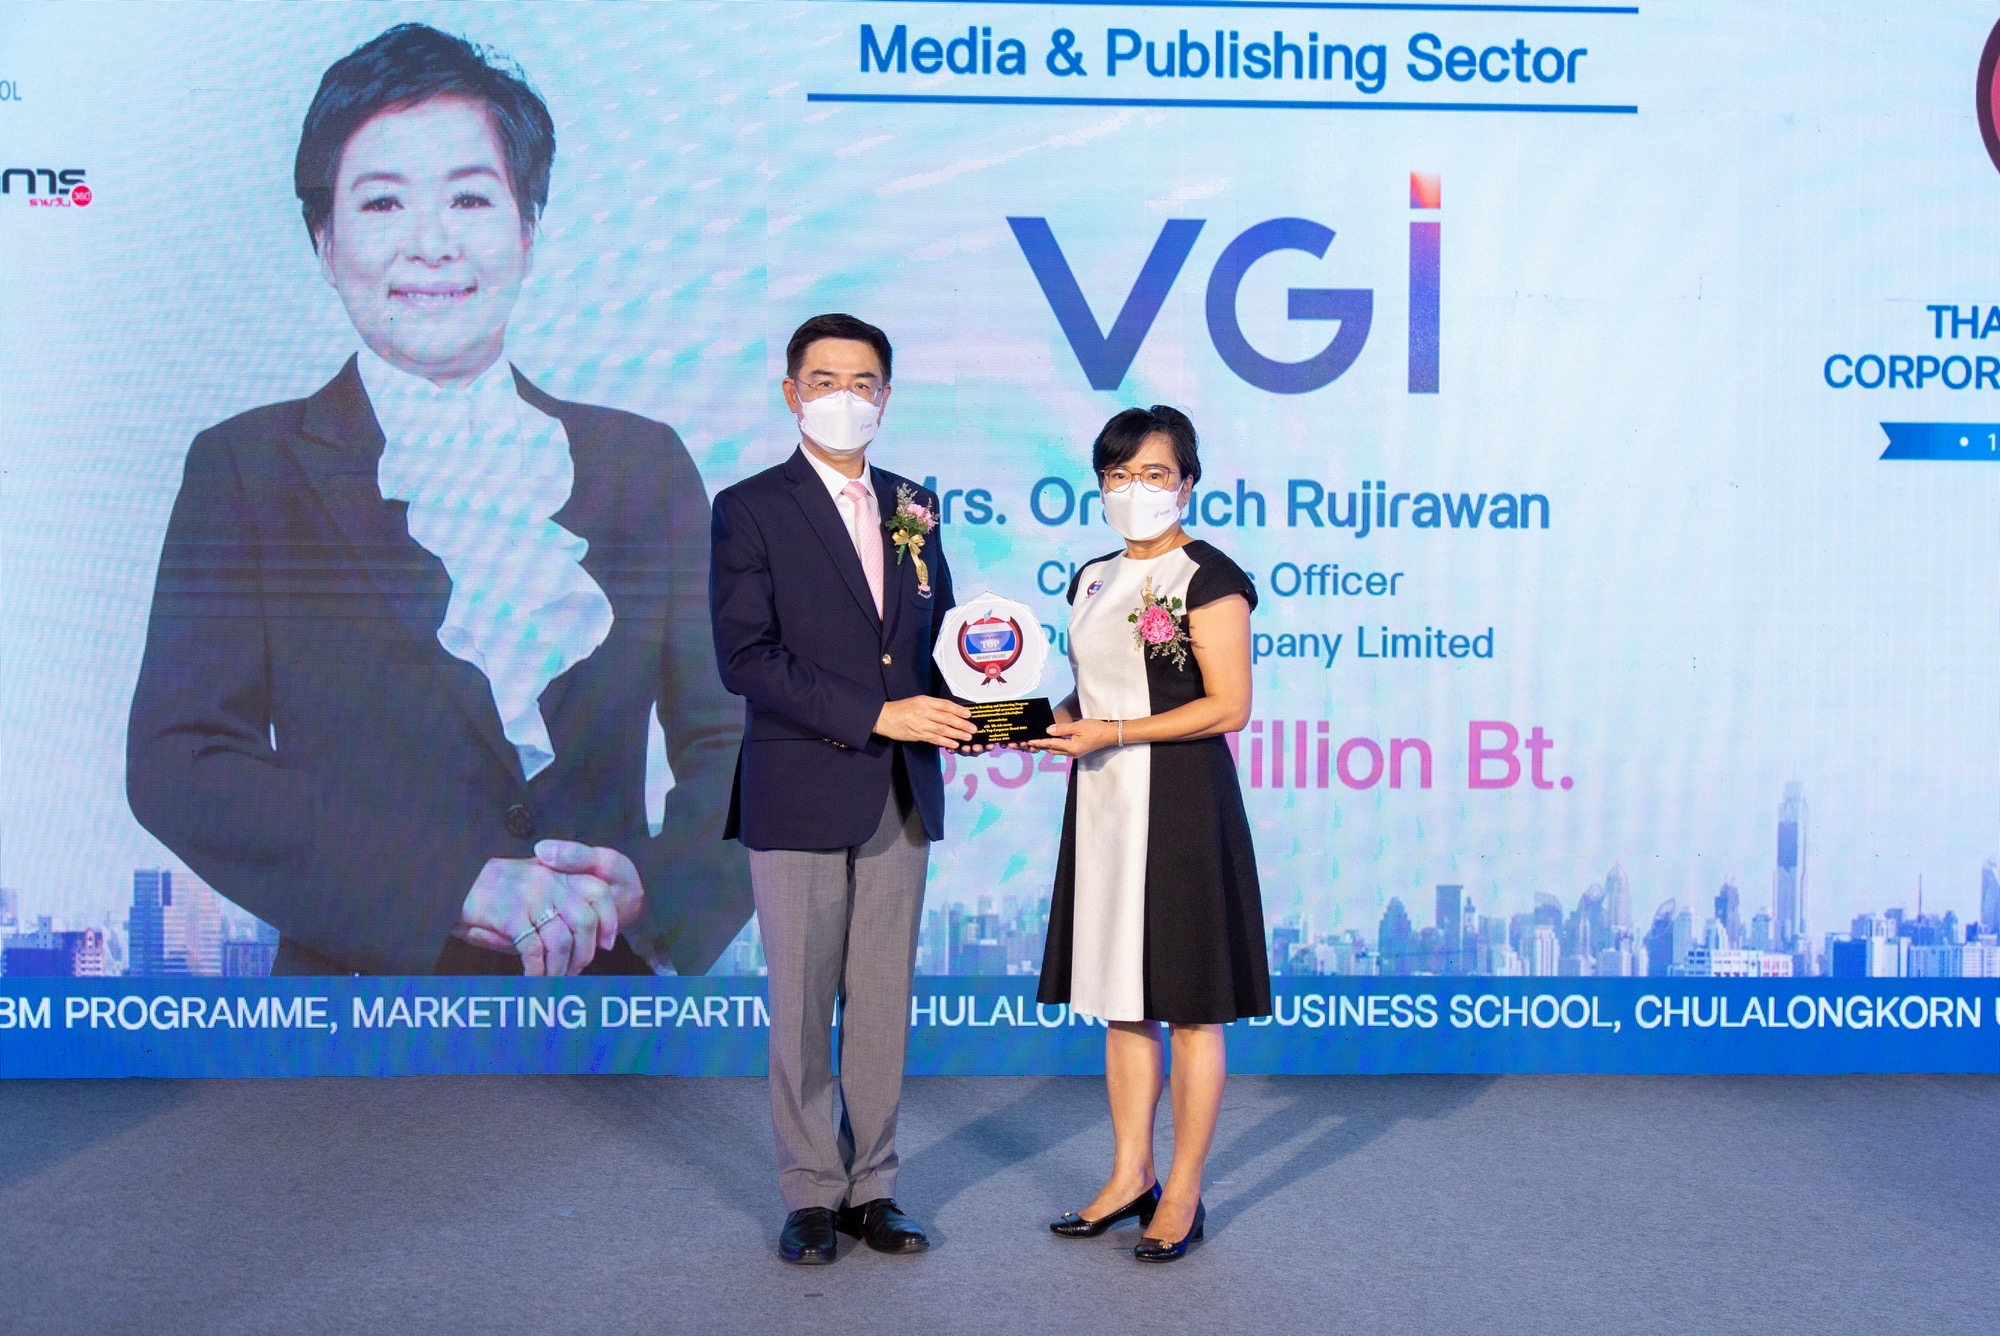 VGI ฉลองรางวัล Thailands Top Corporate Brand 2021 สุดยอดองค์กรที่มีมูลค่าแบรนด์สูงสุด เป็นครั้งที่ 5